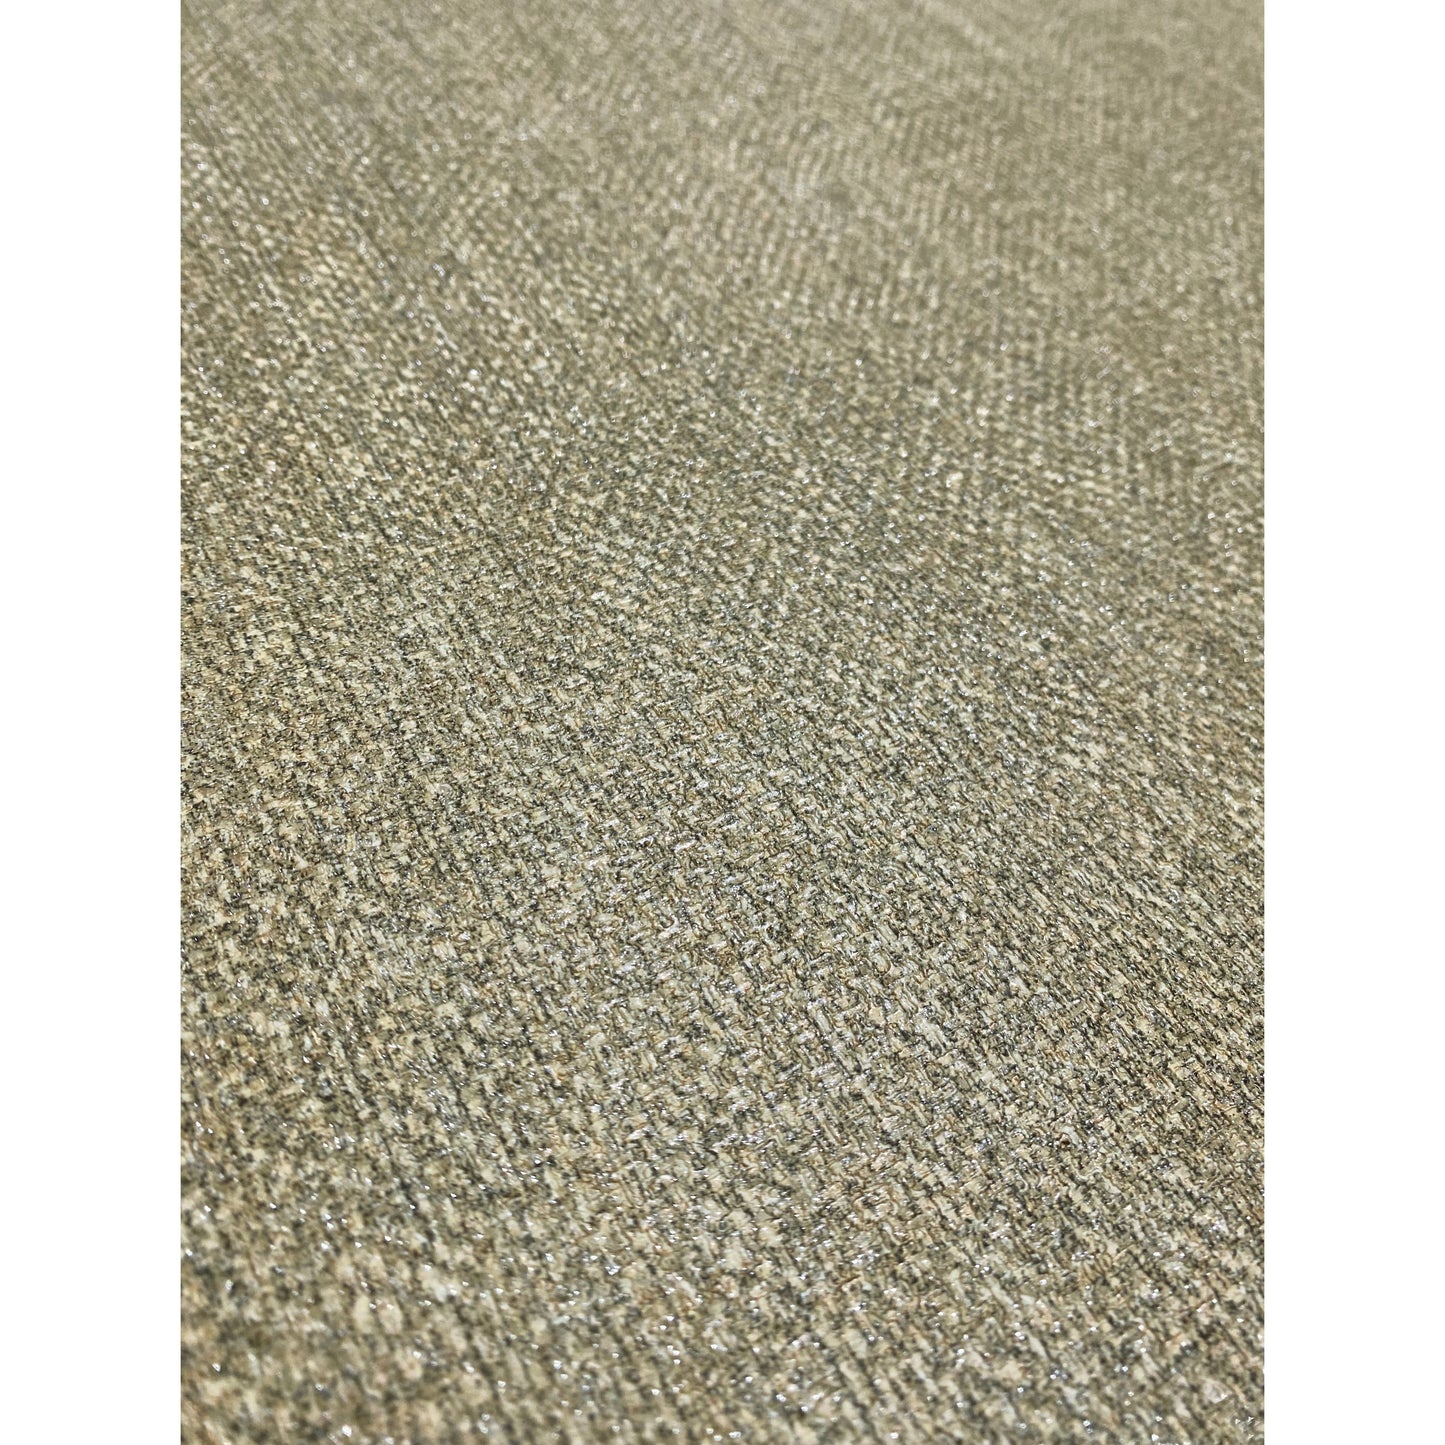 Muriva Venezia Texture Gold Wallpaper (M67302)